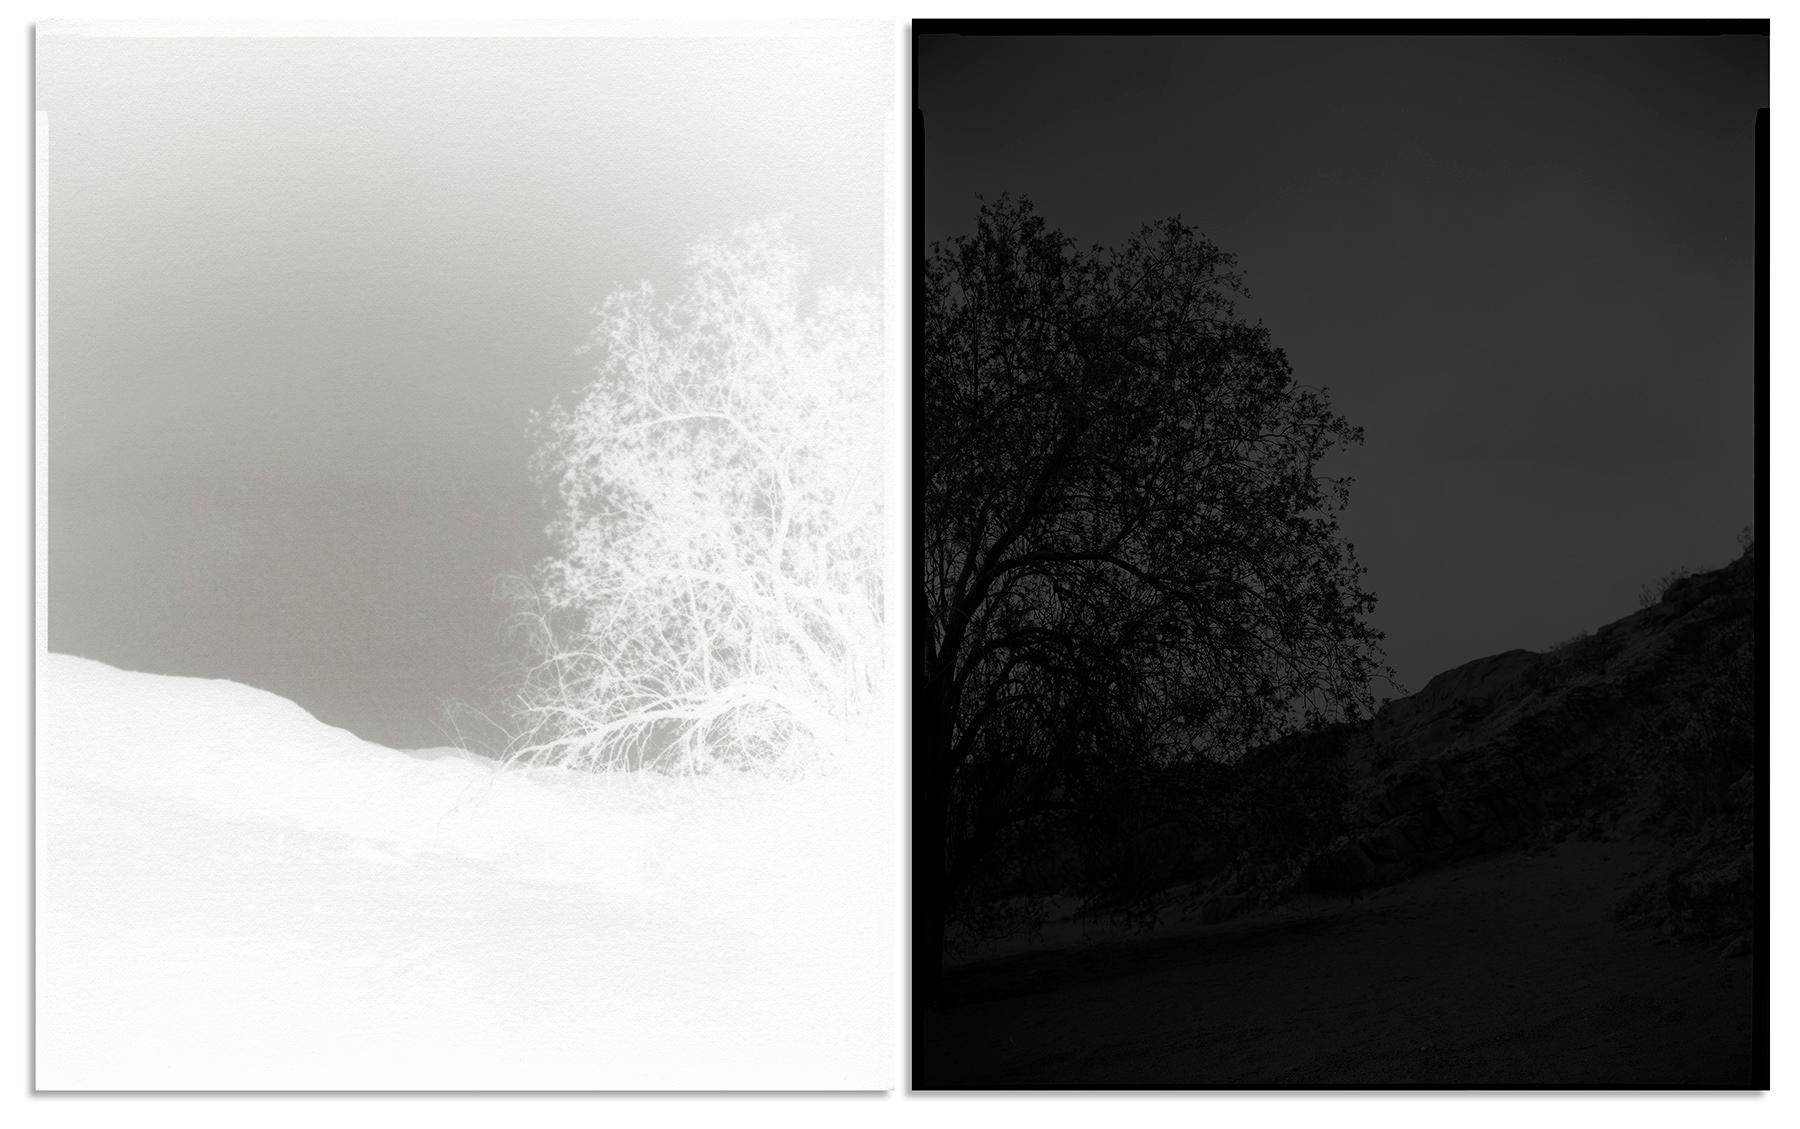 scott b. davis Black and White Photograph - Ironwood Tree, near Borrego mountain, California, 2018